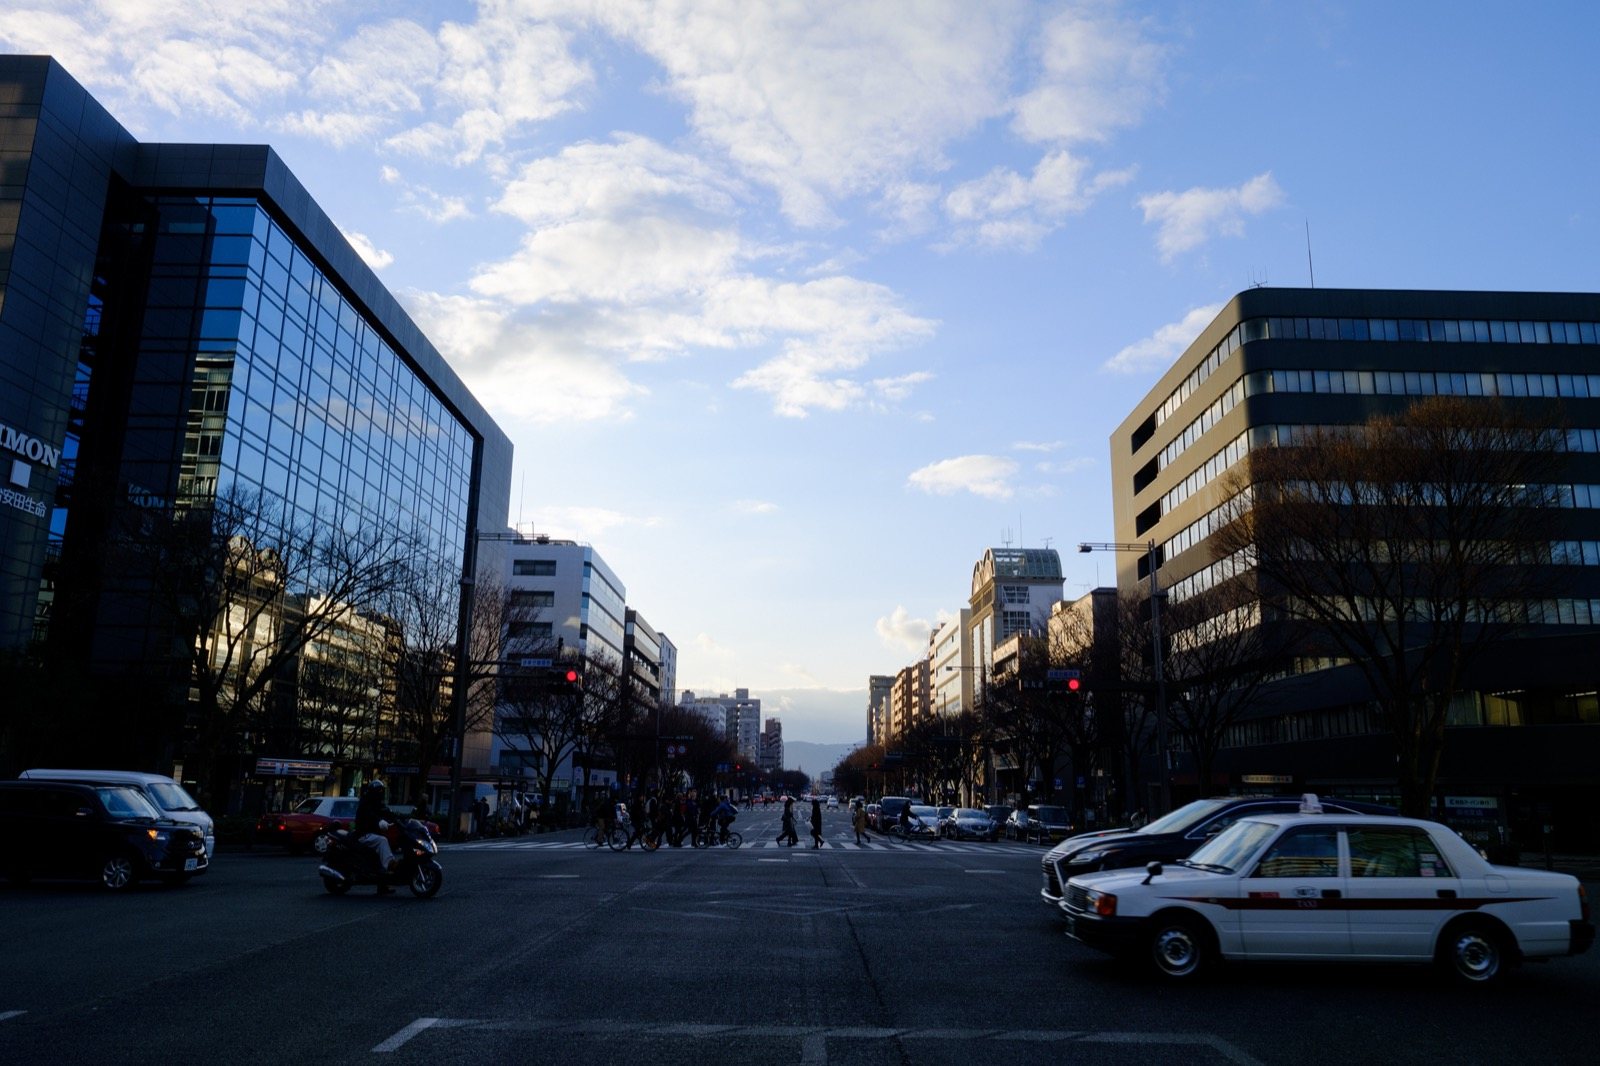 Photo of Downtown, Japan (DSCF5950 by Takashi Nishimura)